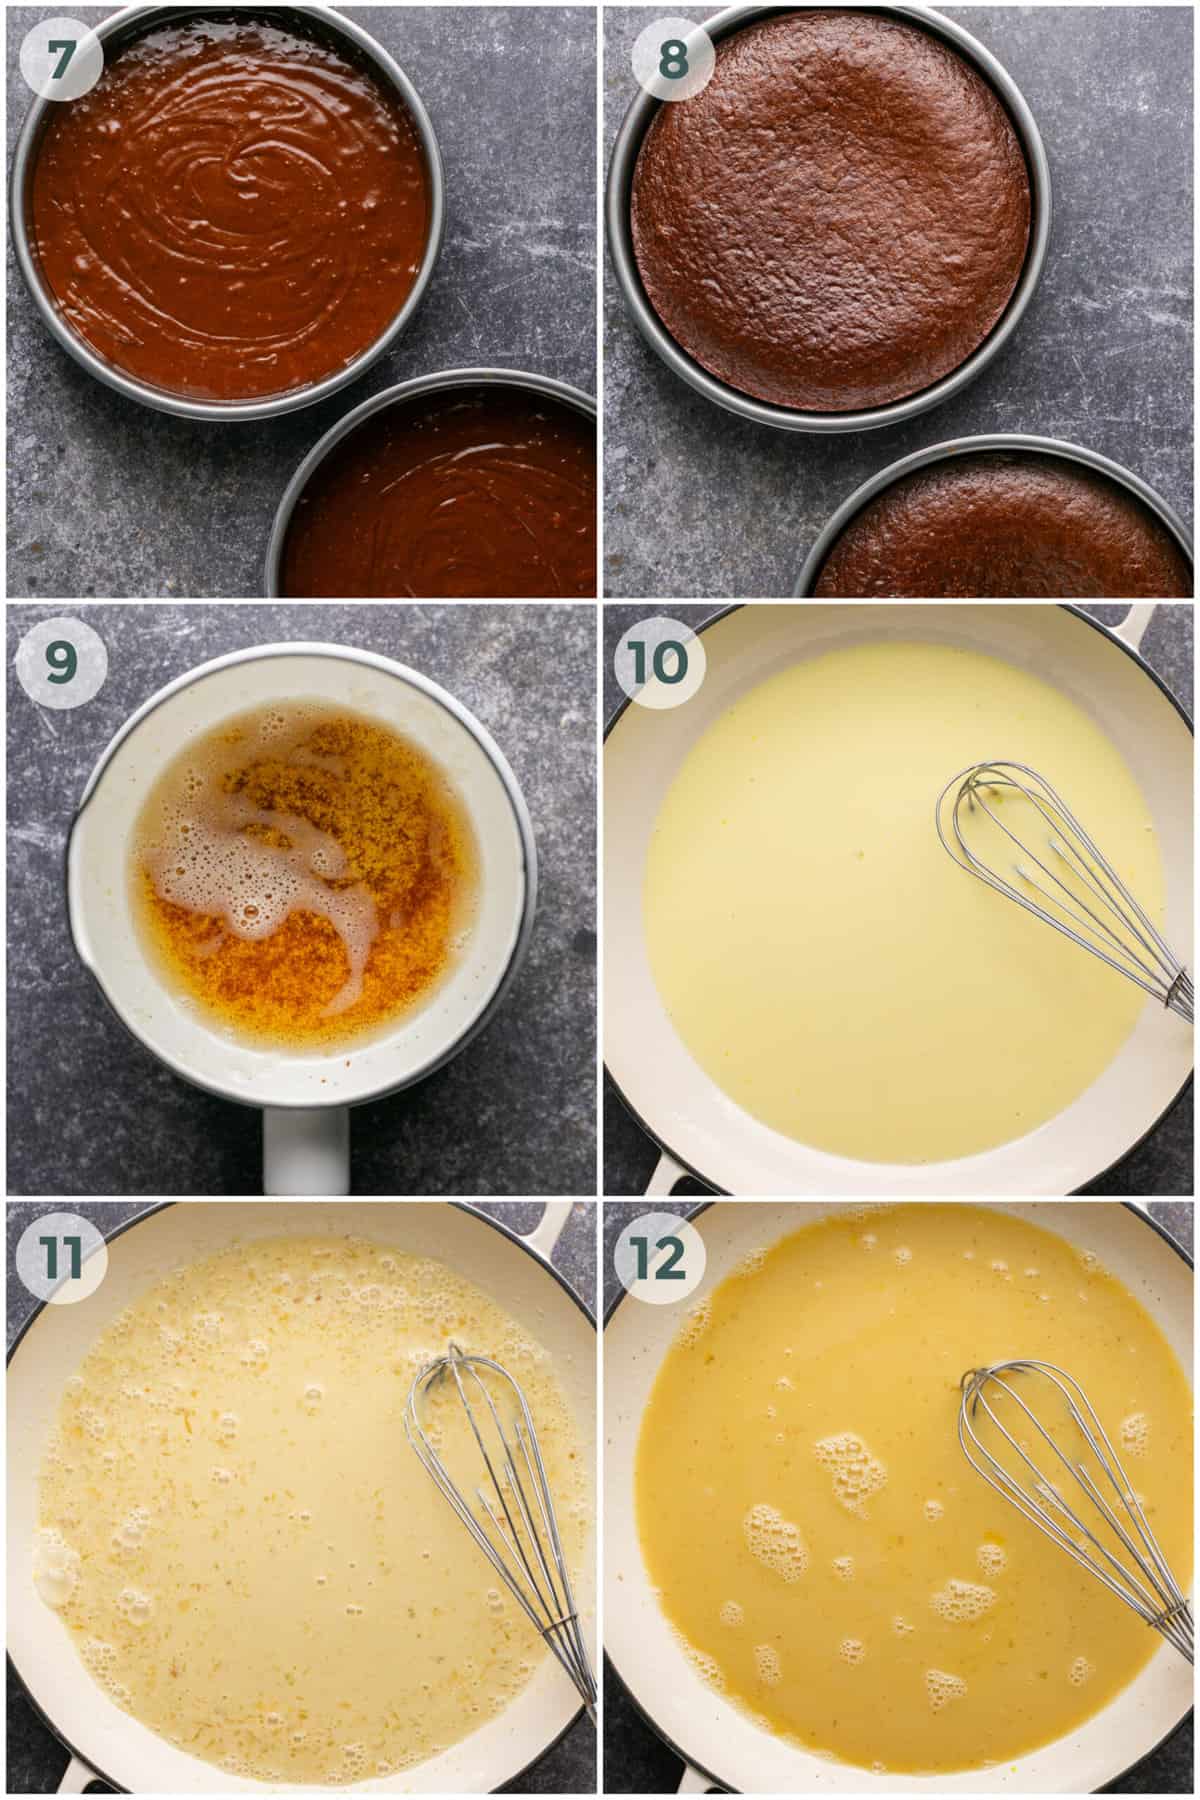 steps 7-12 for german chocolate cake recipe